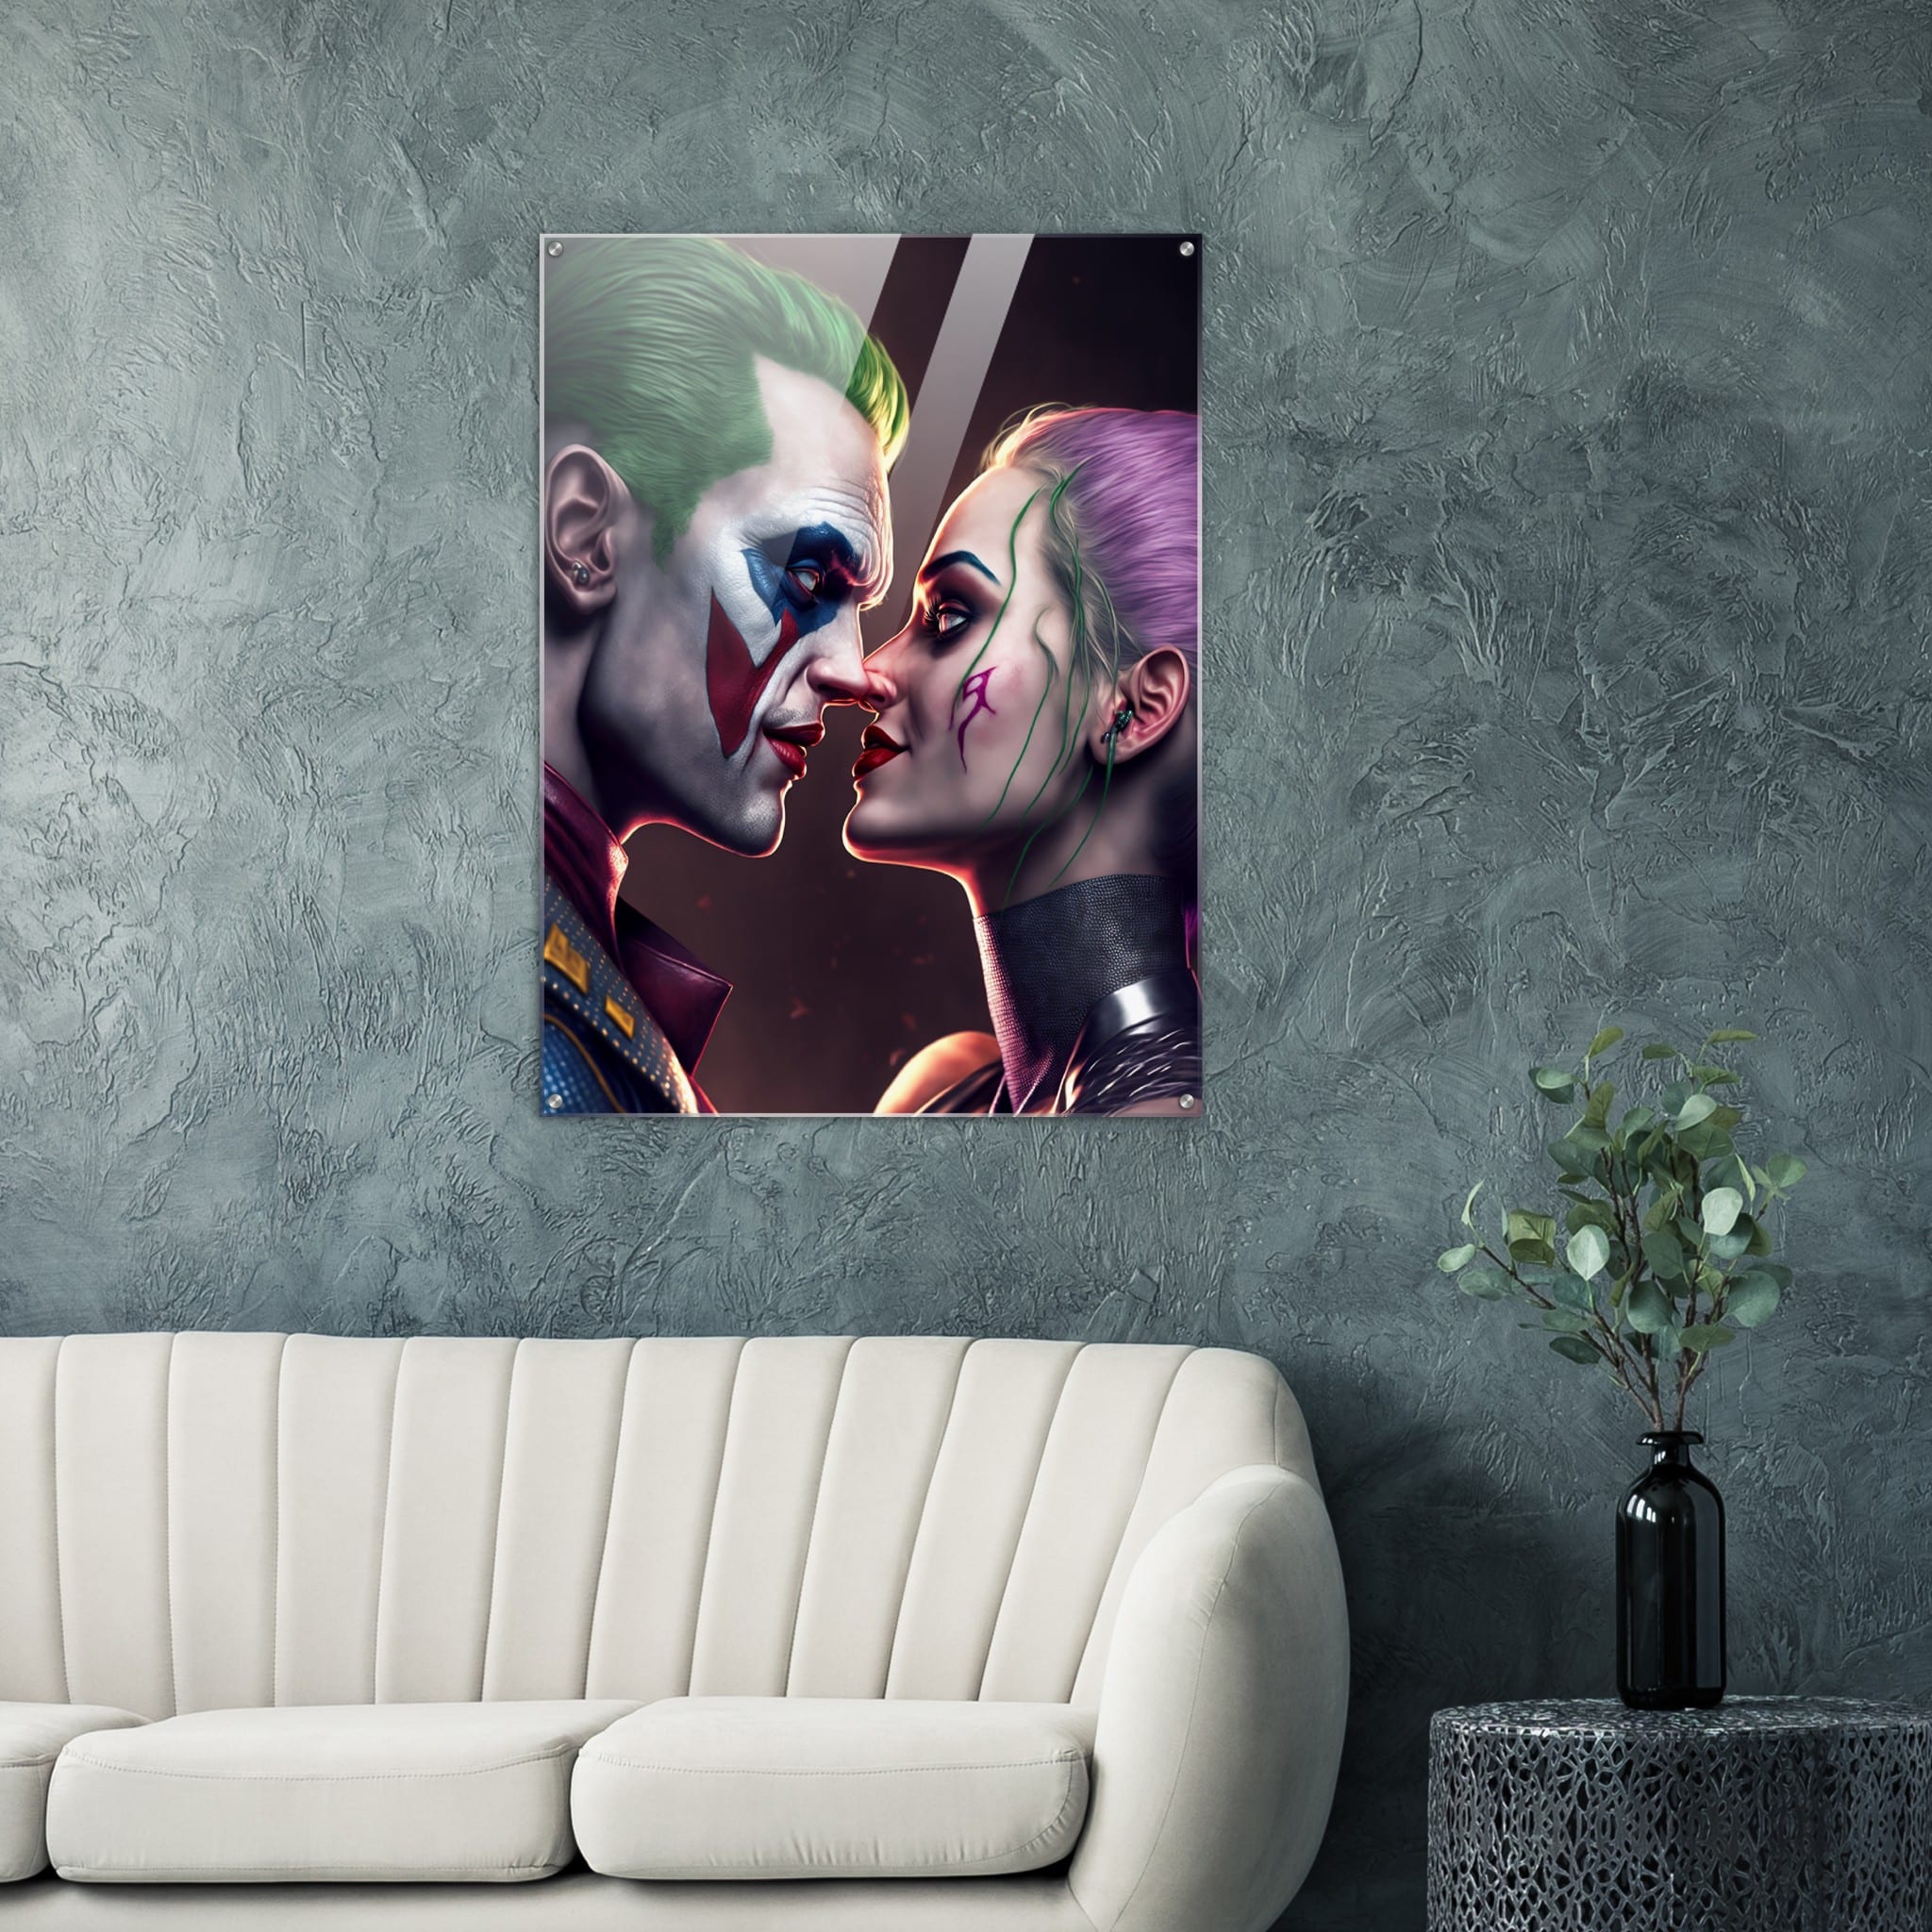 Tableau plexiglass Harley Quinn & Joker